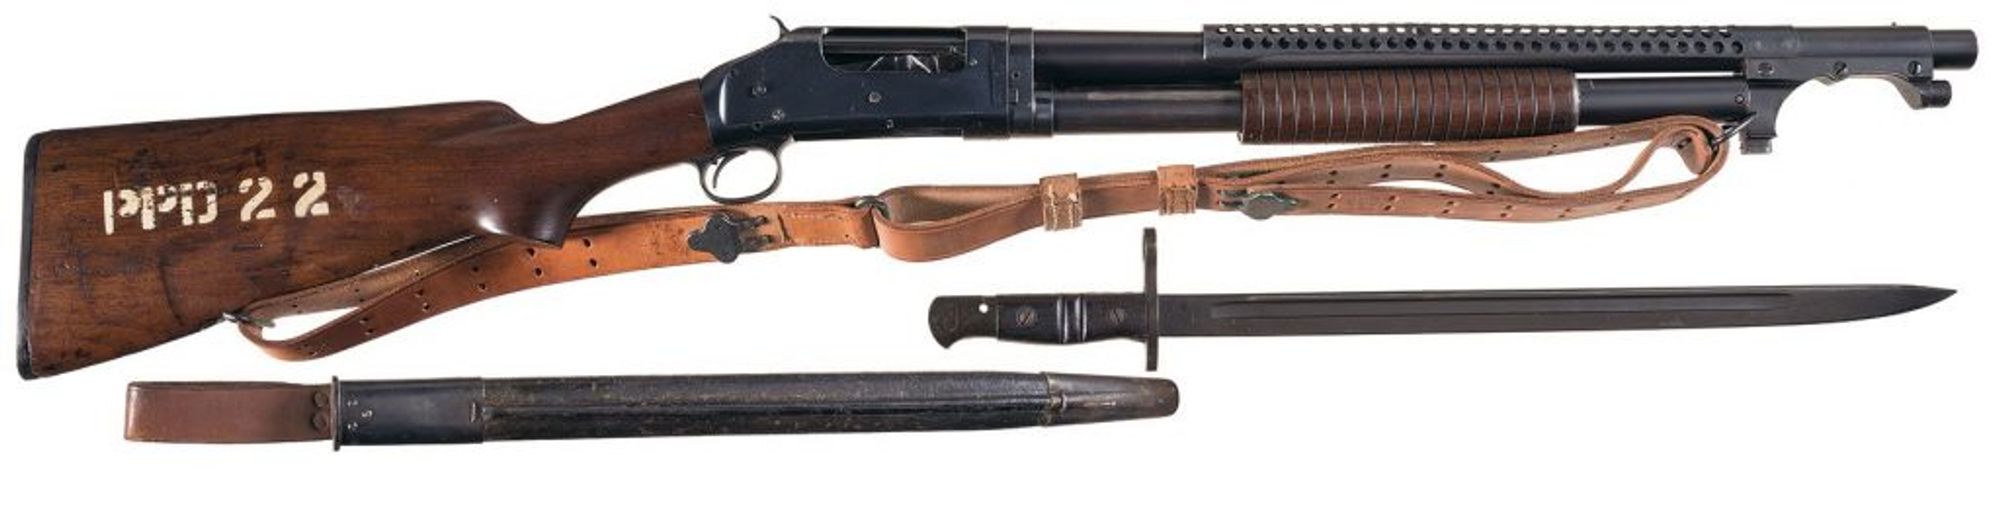 Winchester Model 1897 Trench gun